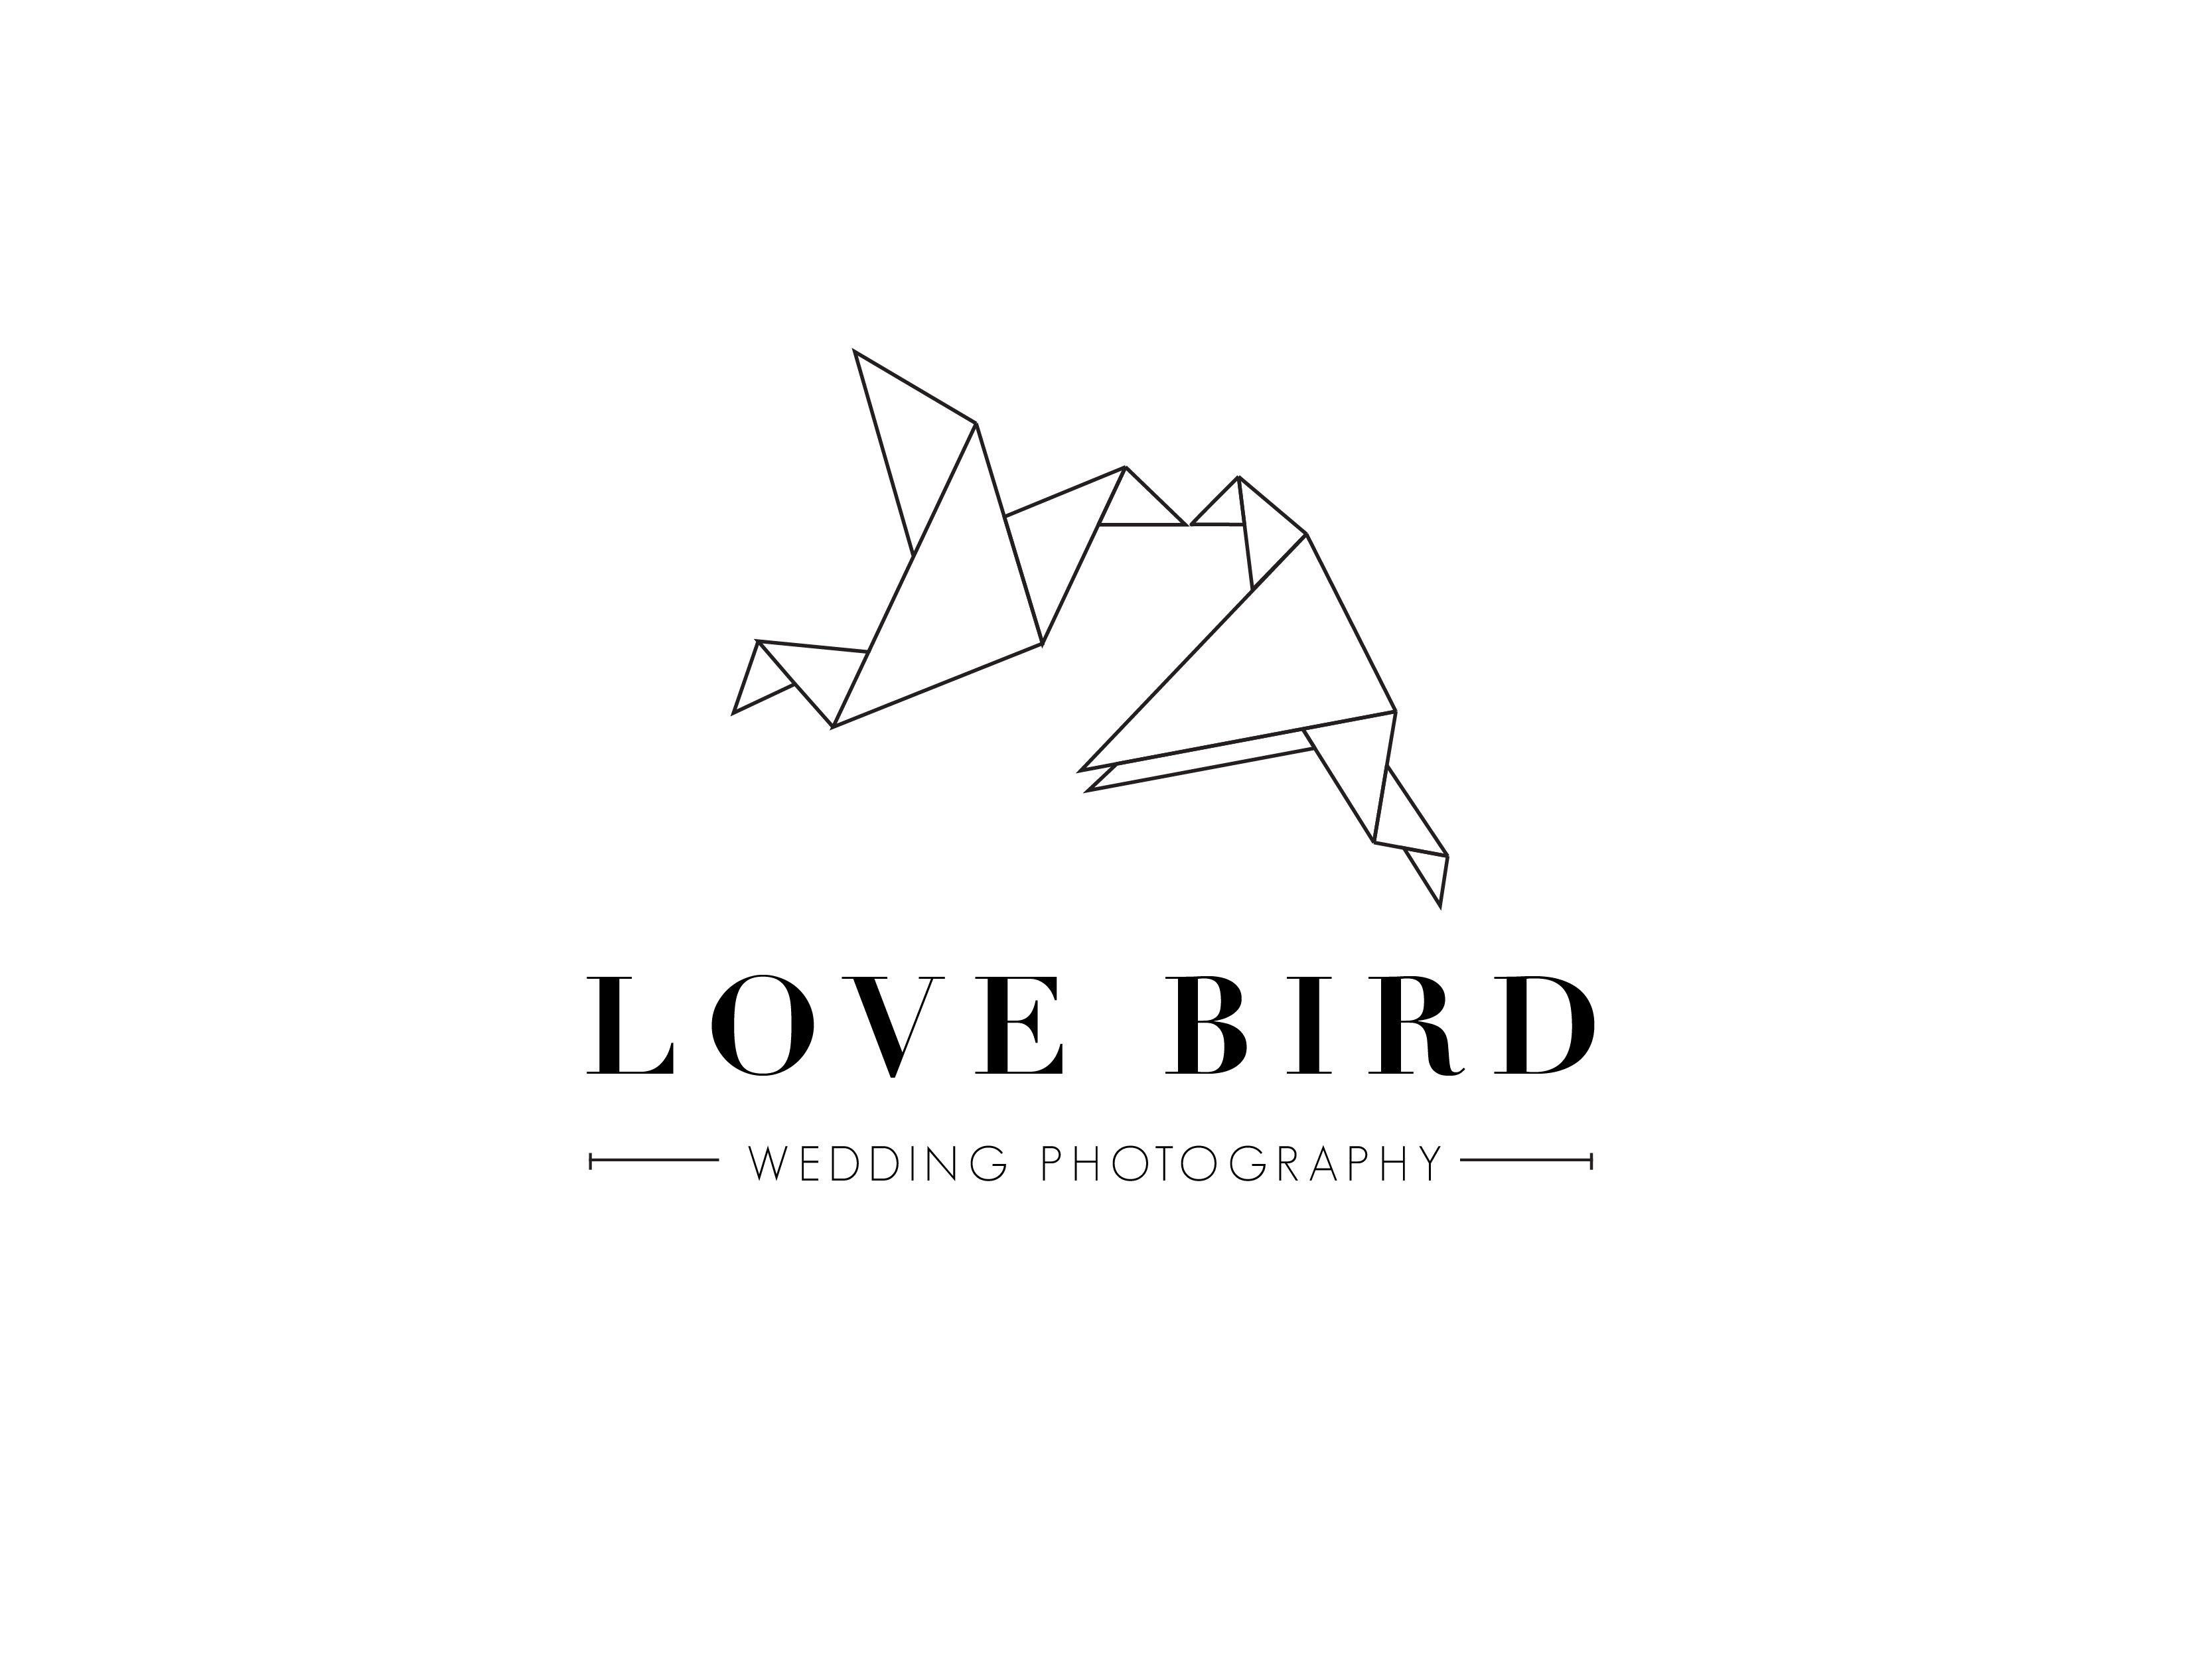 Origami Bird Logo - Just My Type} Love bird logo | Just My Type